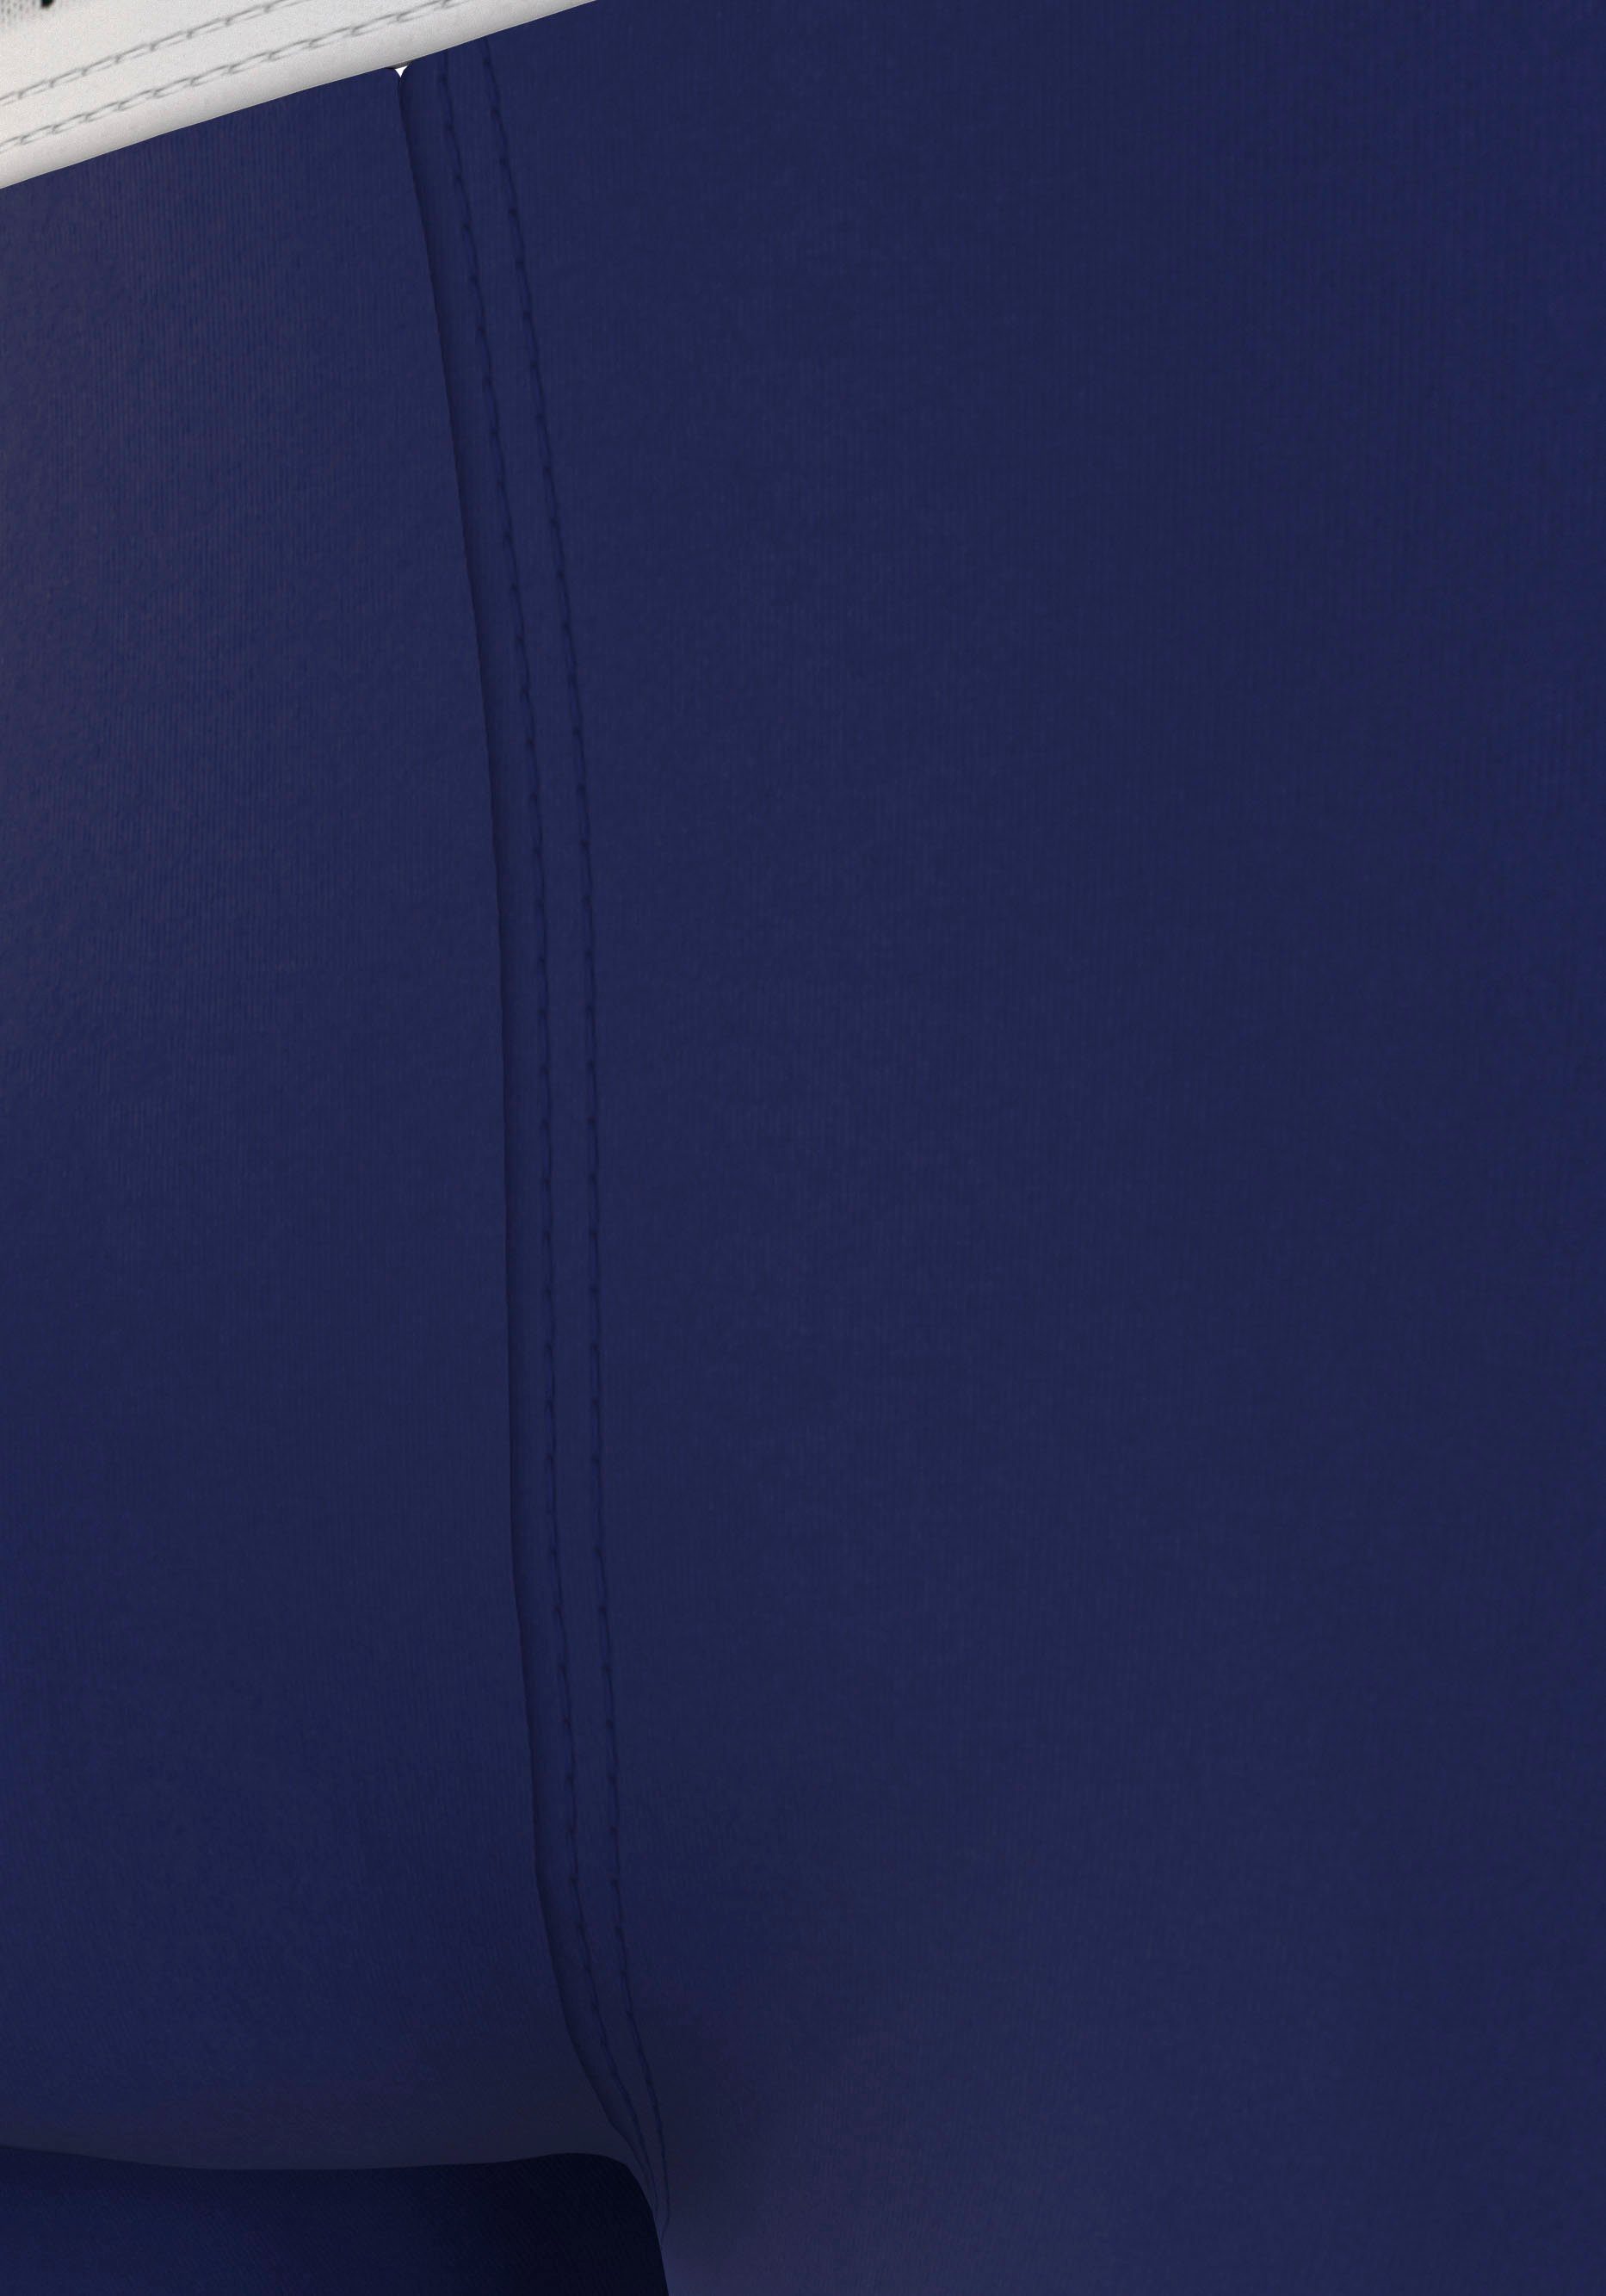 Blue Tommy (Packung, Logoschriftzug Blue Trunk TRUNK Ink/ Hilfiger 3er-Pack) mit PRINT Iris 3P Underwear